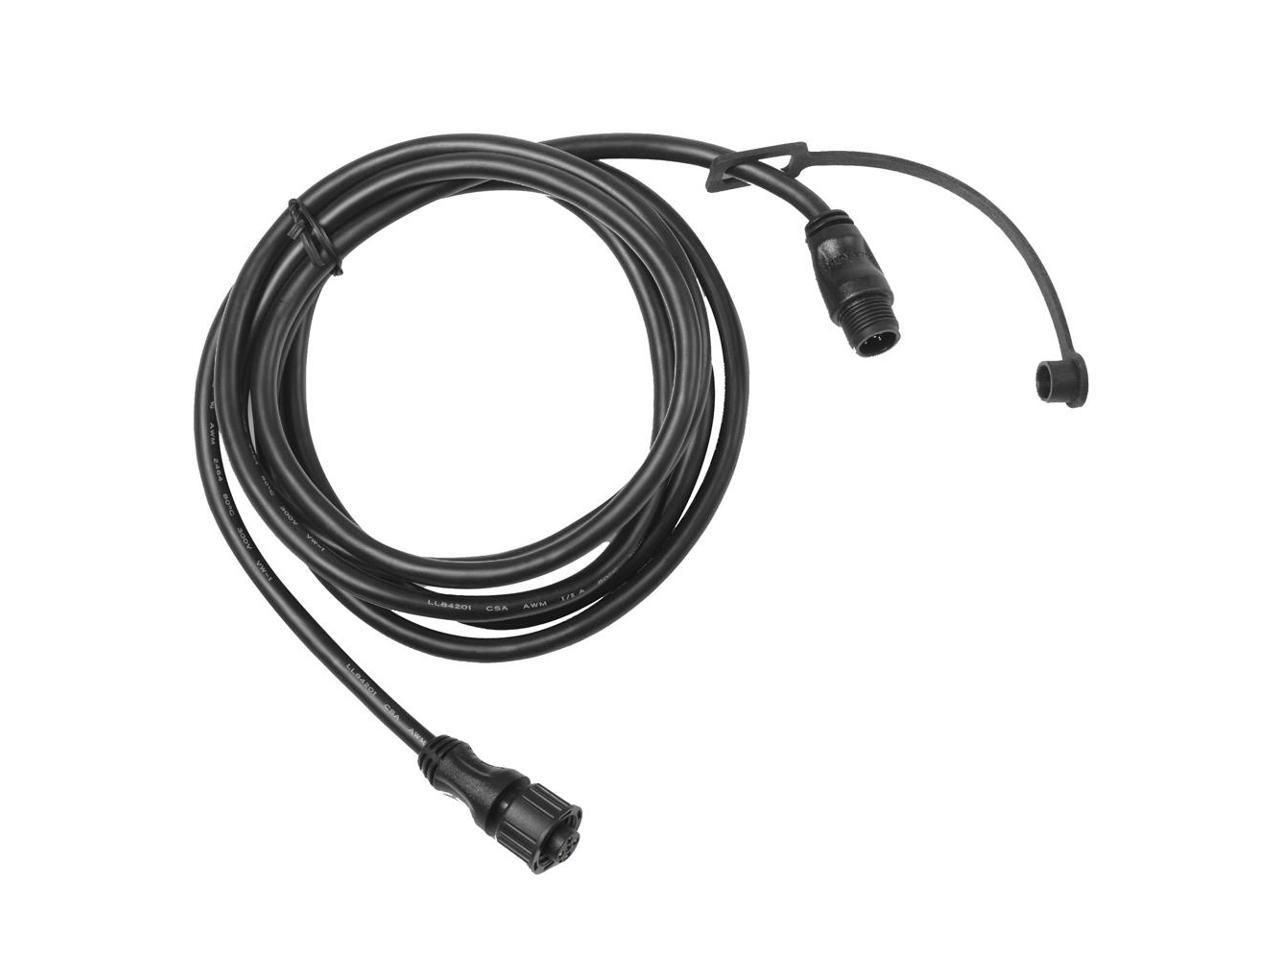 2m 270302 for sale online Ancor NMEA 2000 Drop Cable 